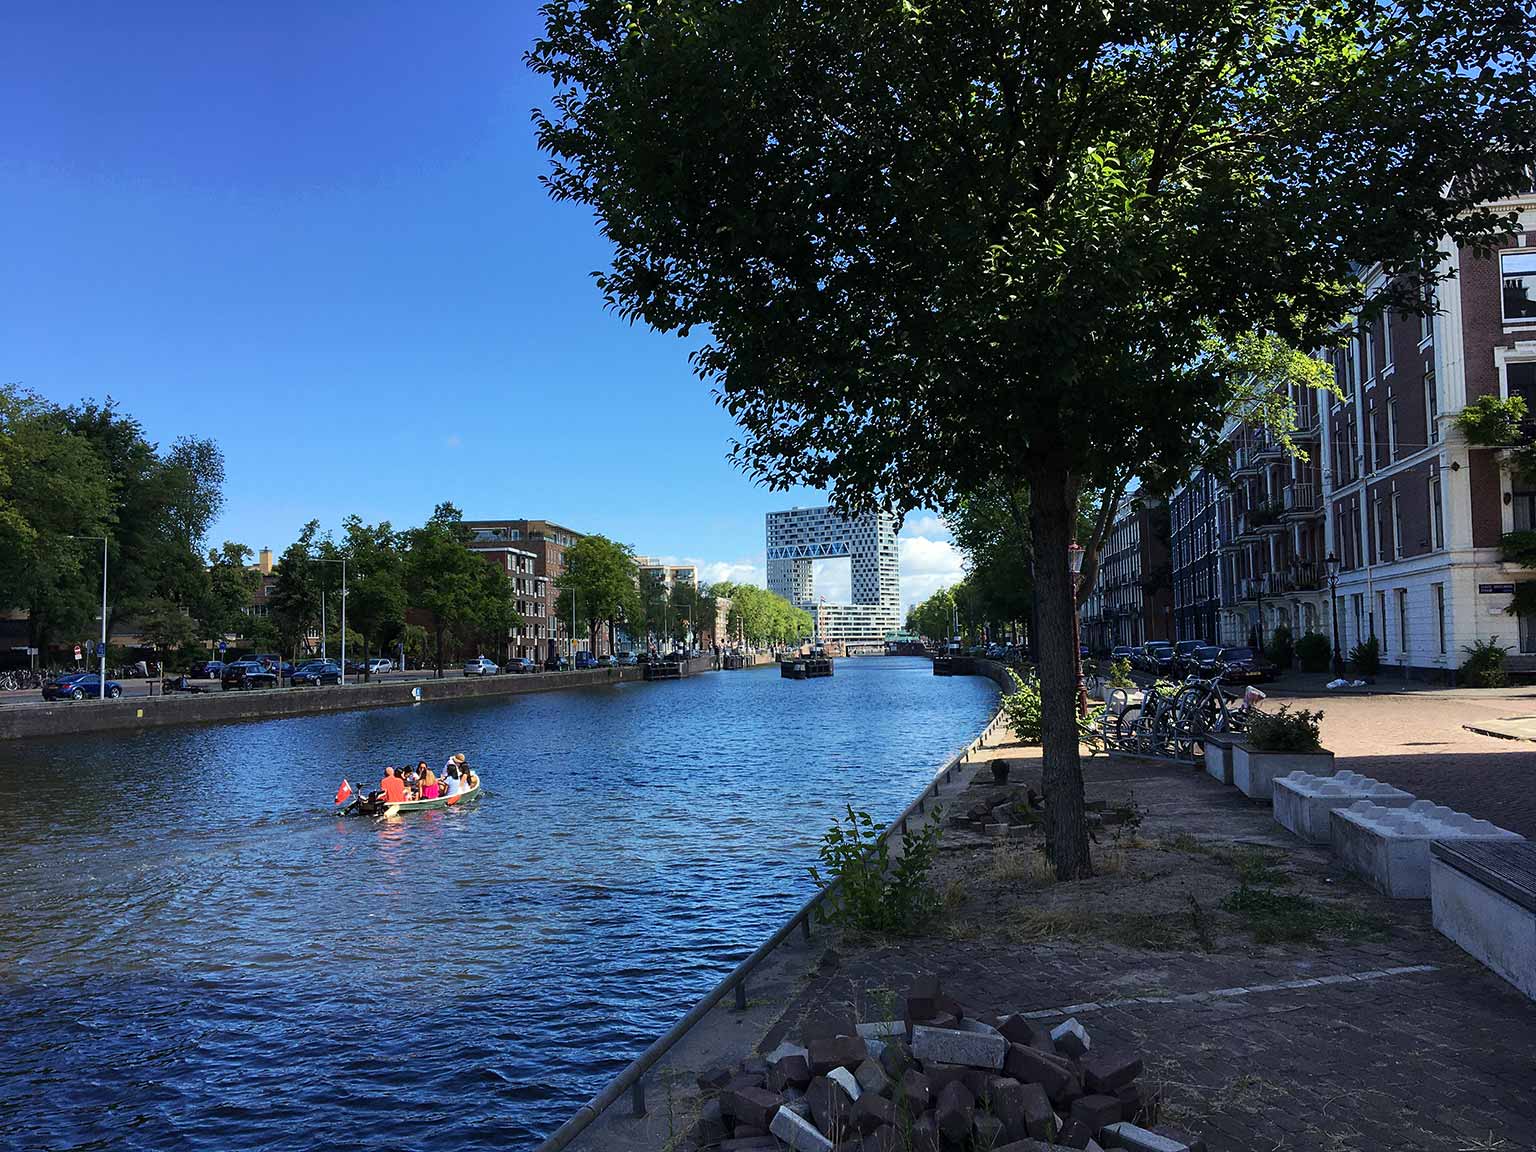 Houtmankade with Westerkanaal, Amsterdam, looking north towards the IJ